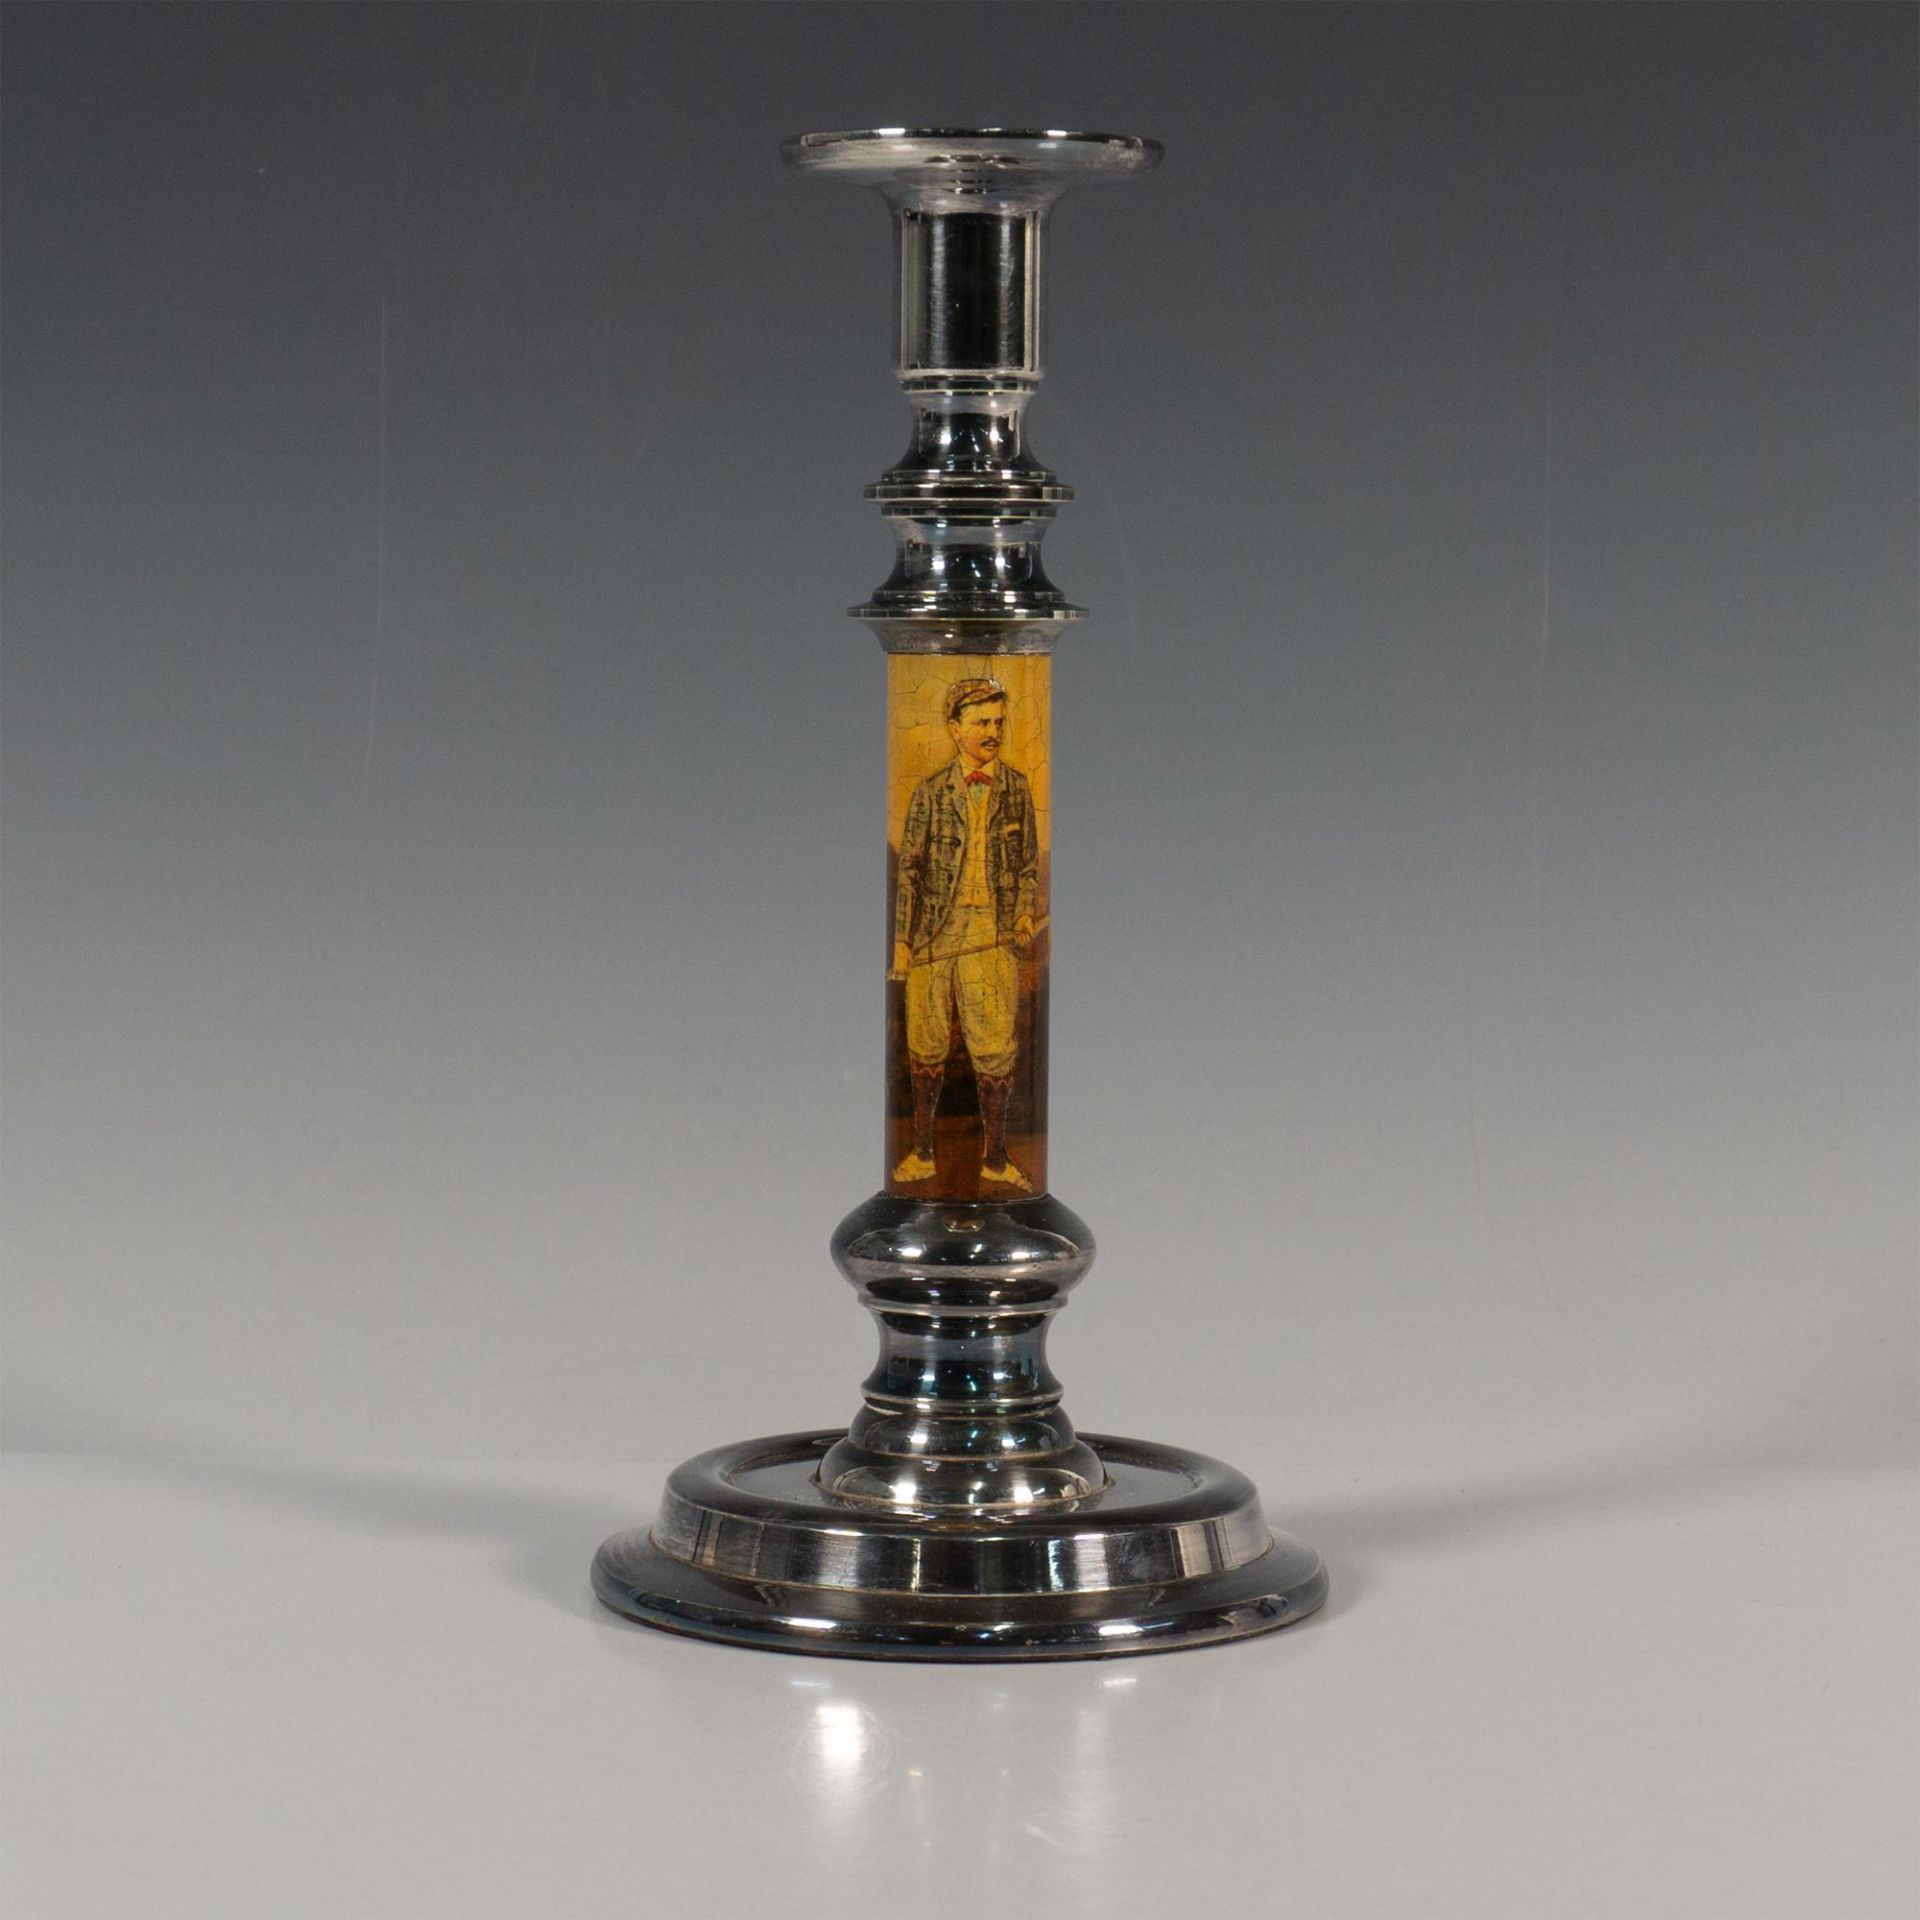 Original Victorian Design Silverplated Candlestick Holder - Image 2 of 3